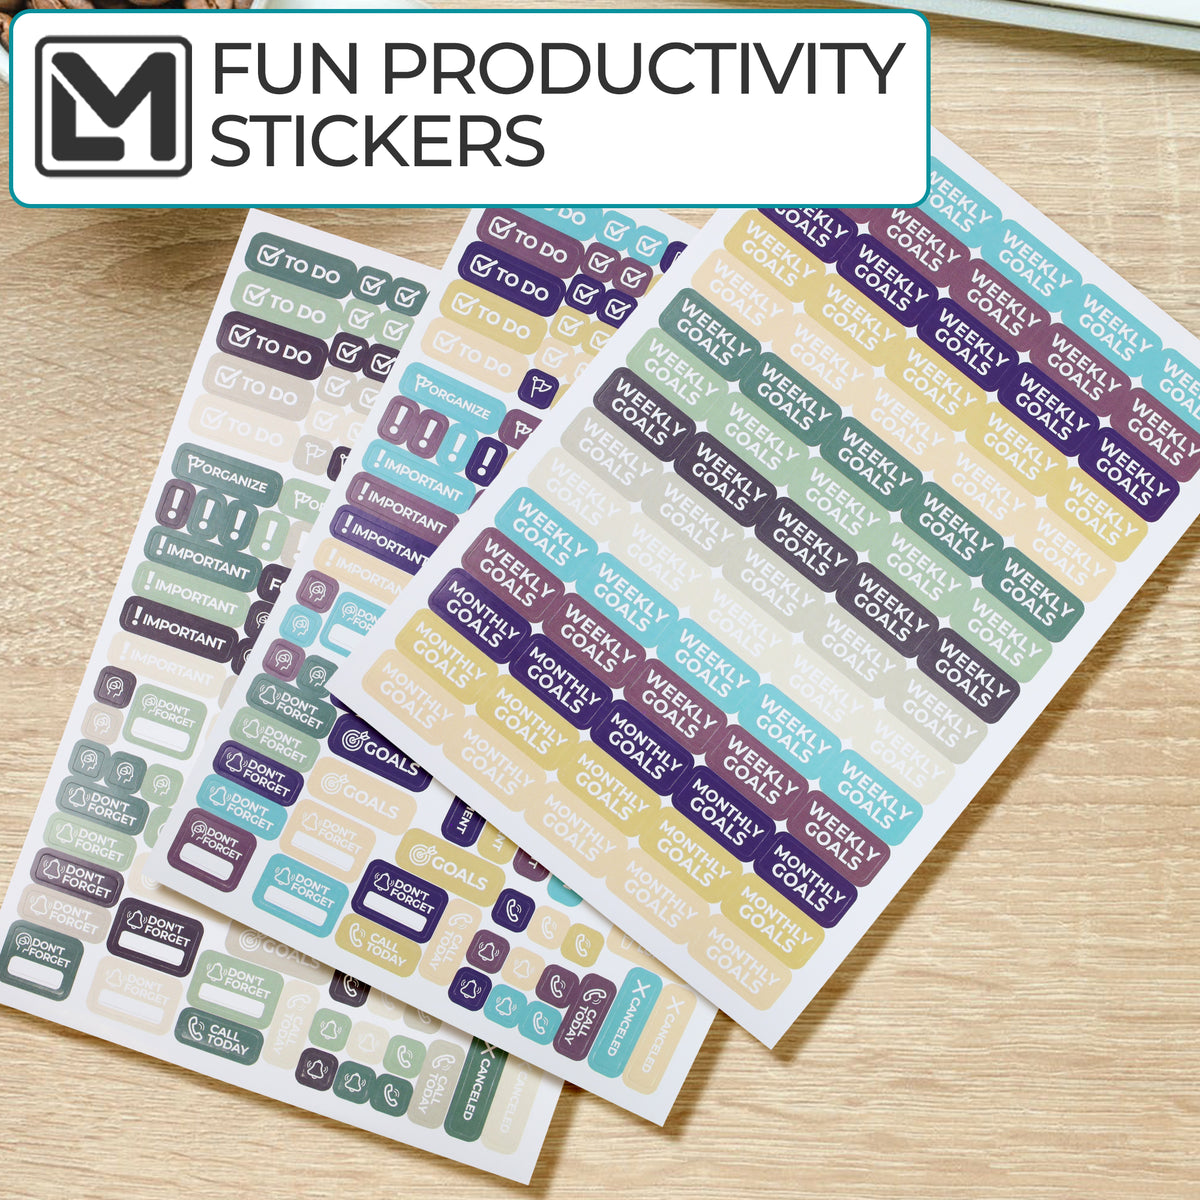 Productivity Sticker Pack